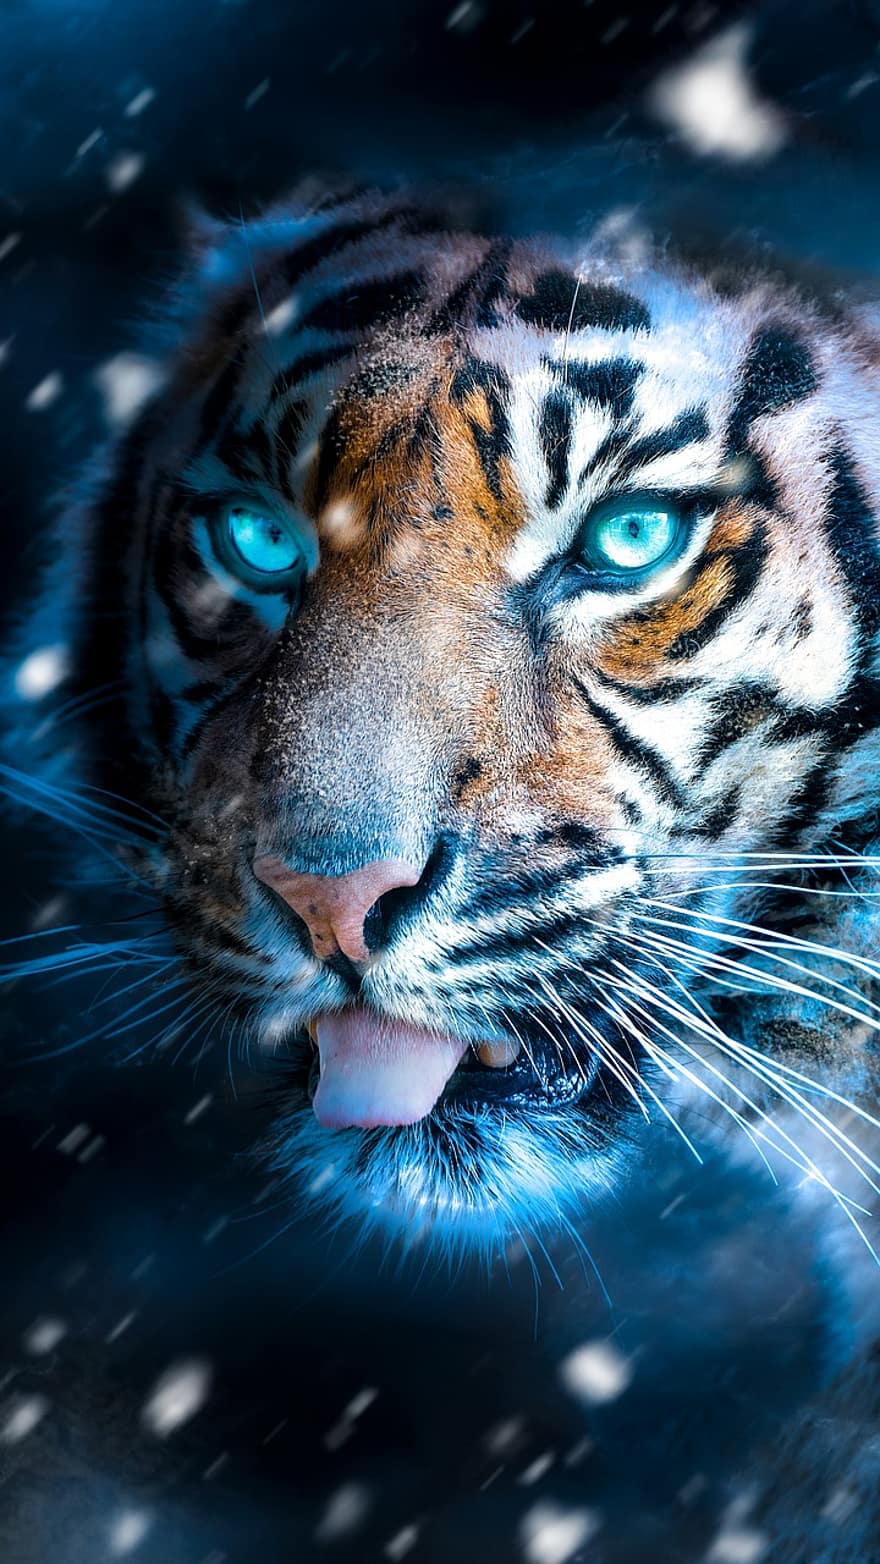 tigre, hivern, vent de neu, fred, fosc